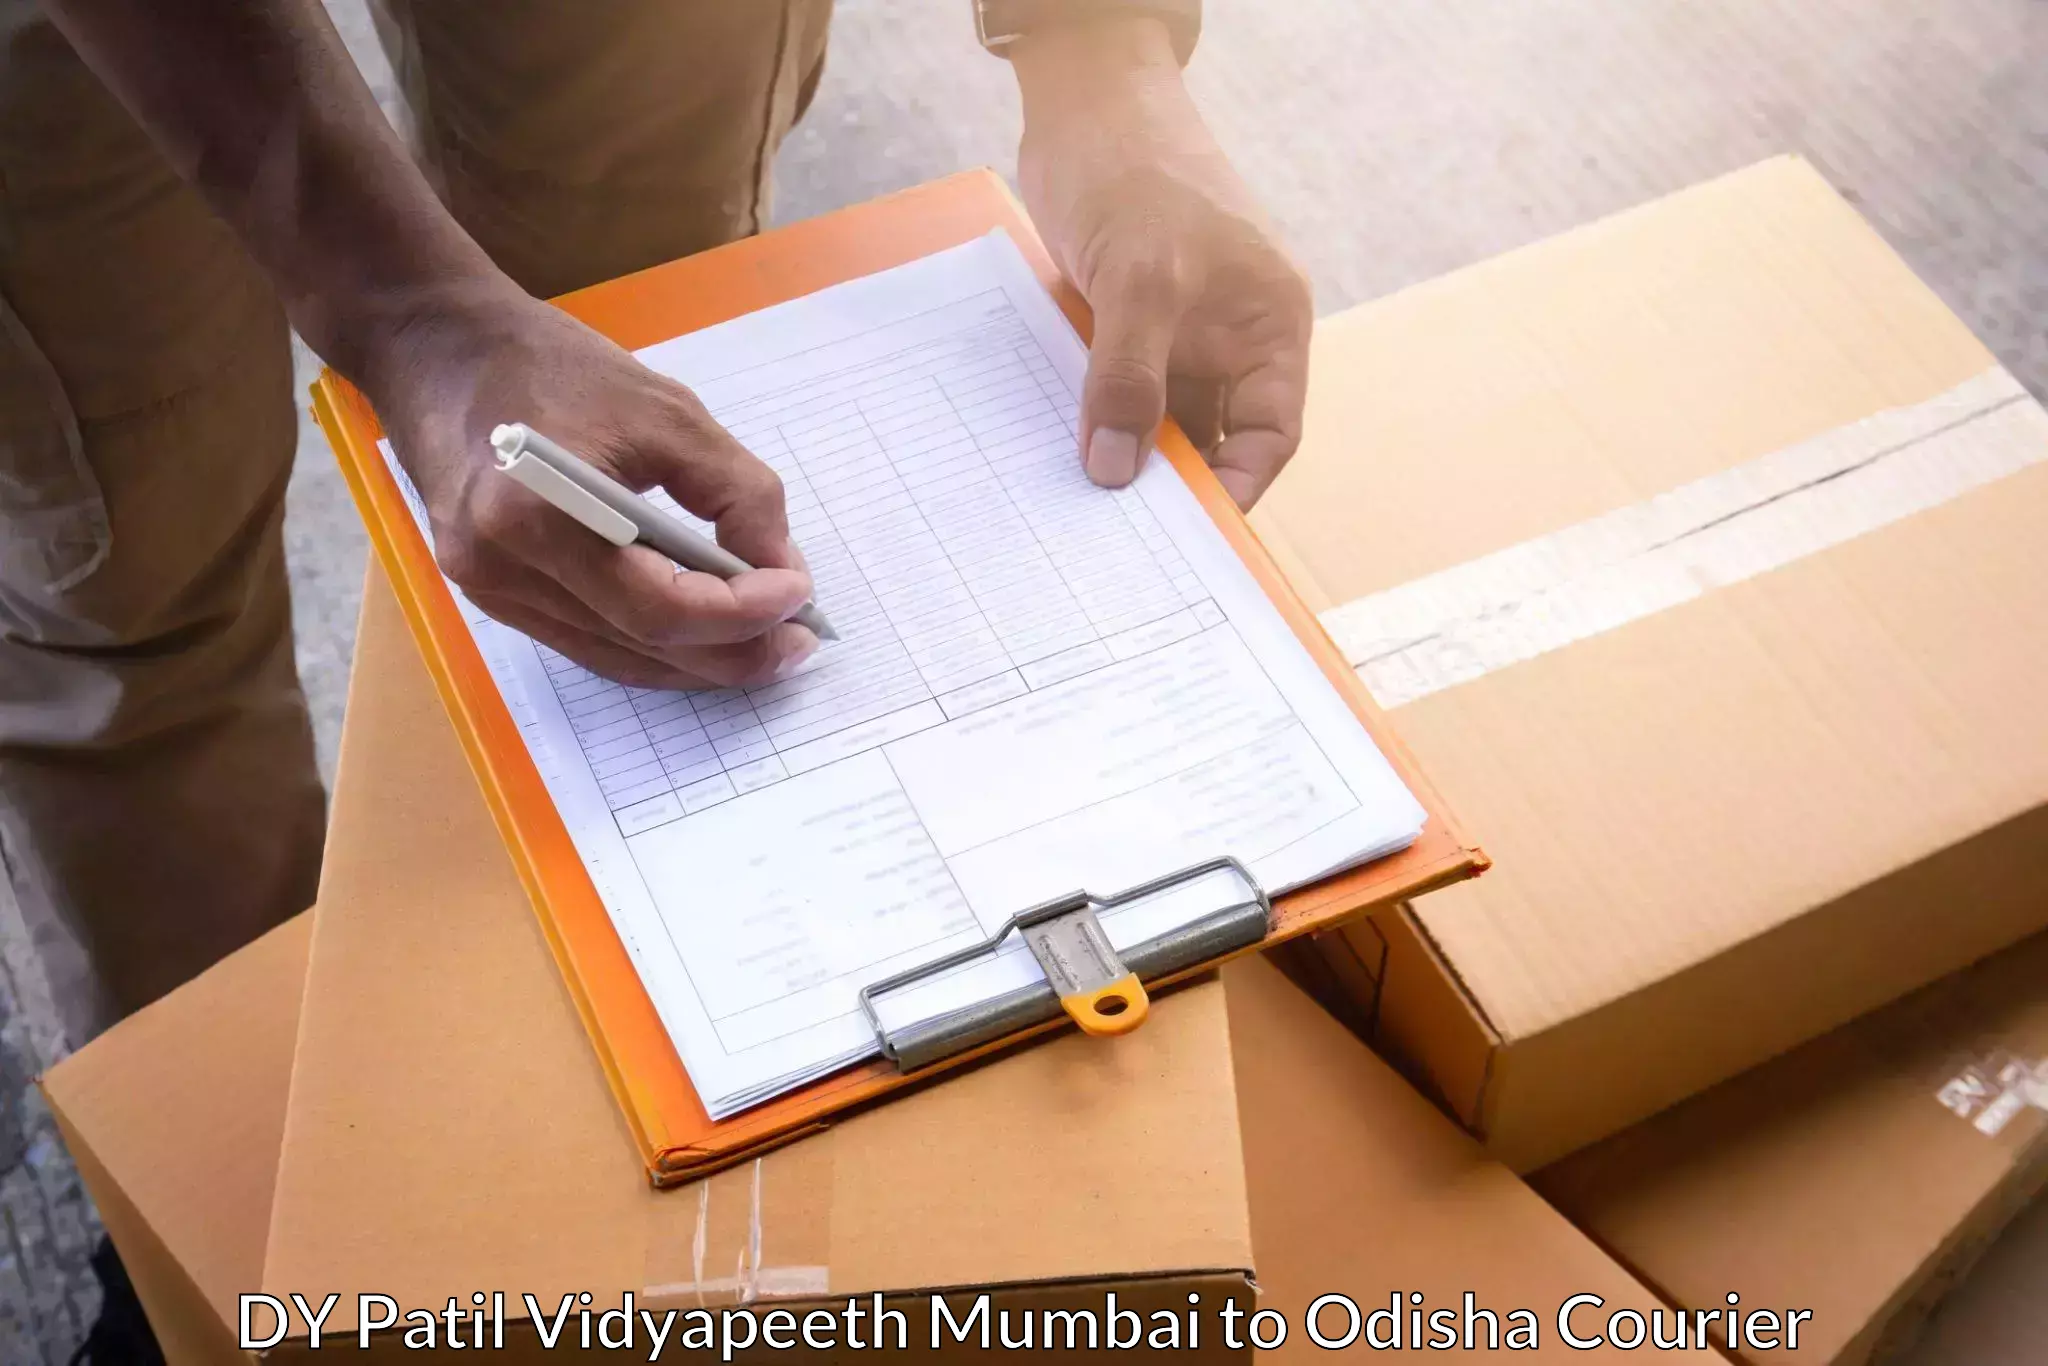 Local delivery service DY Patil Vidyapeeth Mumbai to Chhendipada